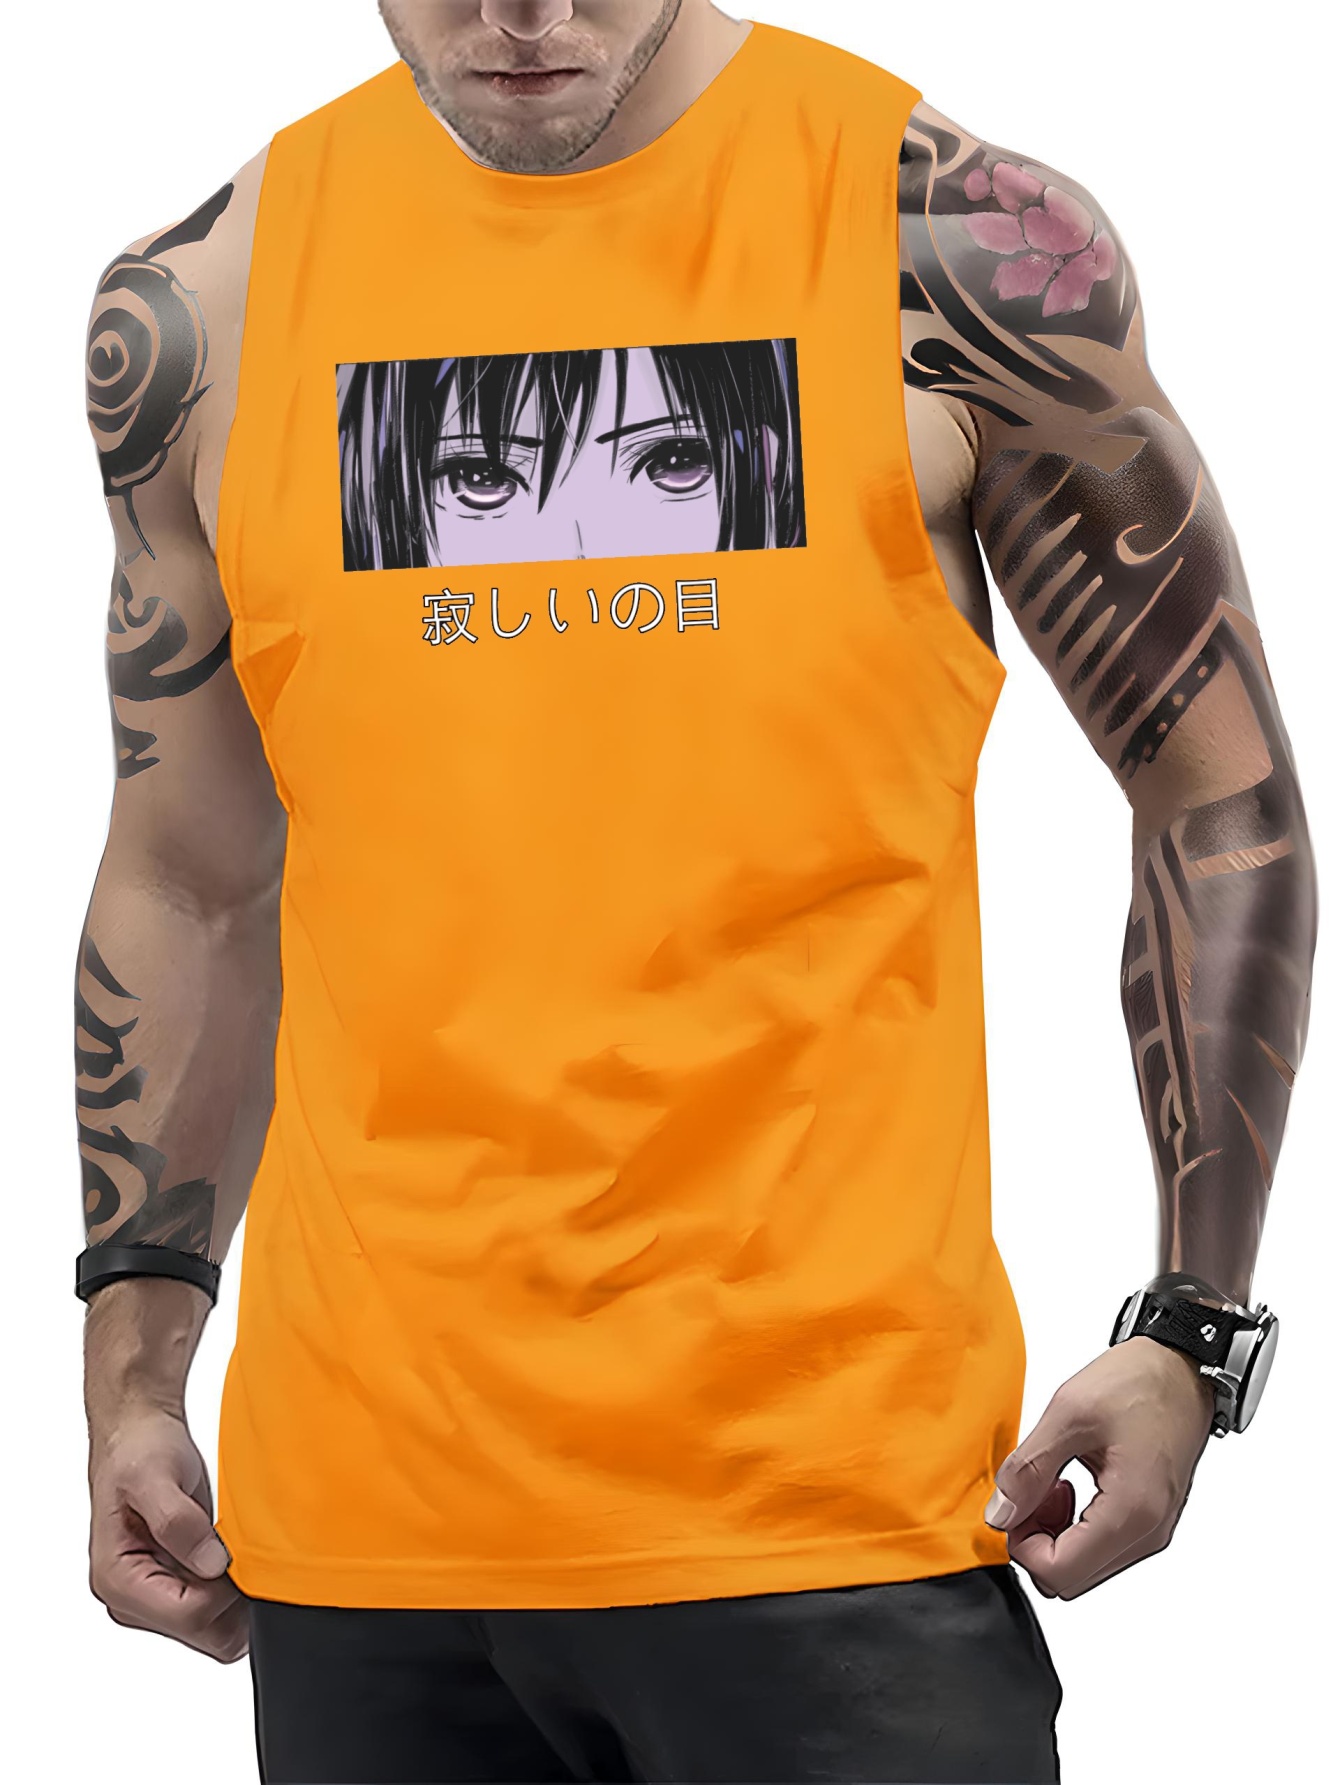 Bakugou with sleeveless tank top | Cute anime guys, Cute anime character,  Hottest anime characters